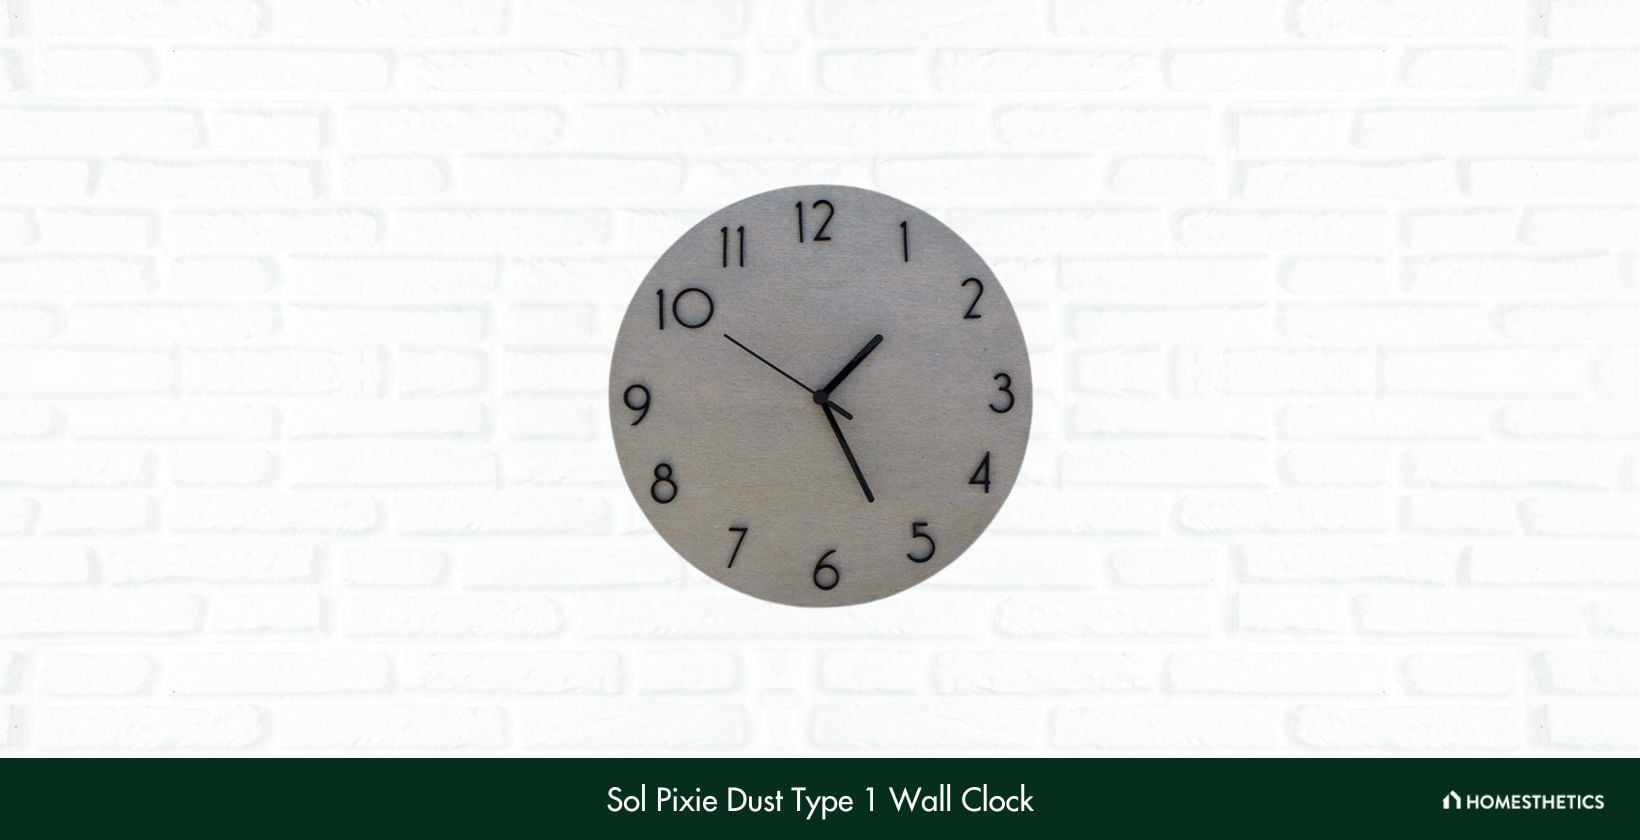 Sol Pixie Dust Type 1 Wall Clock